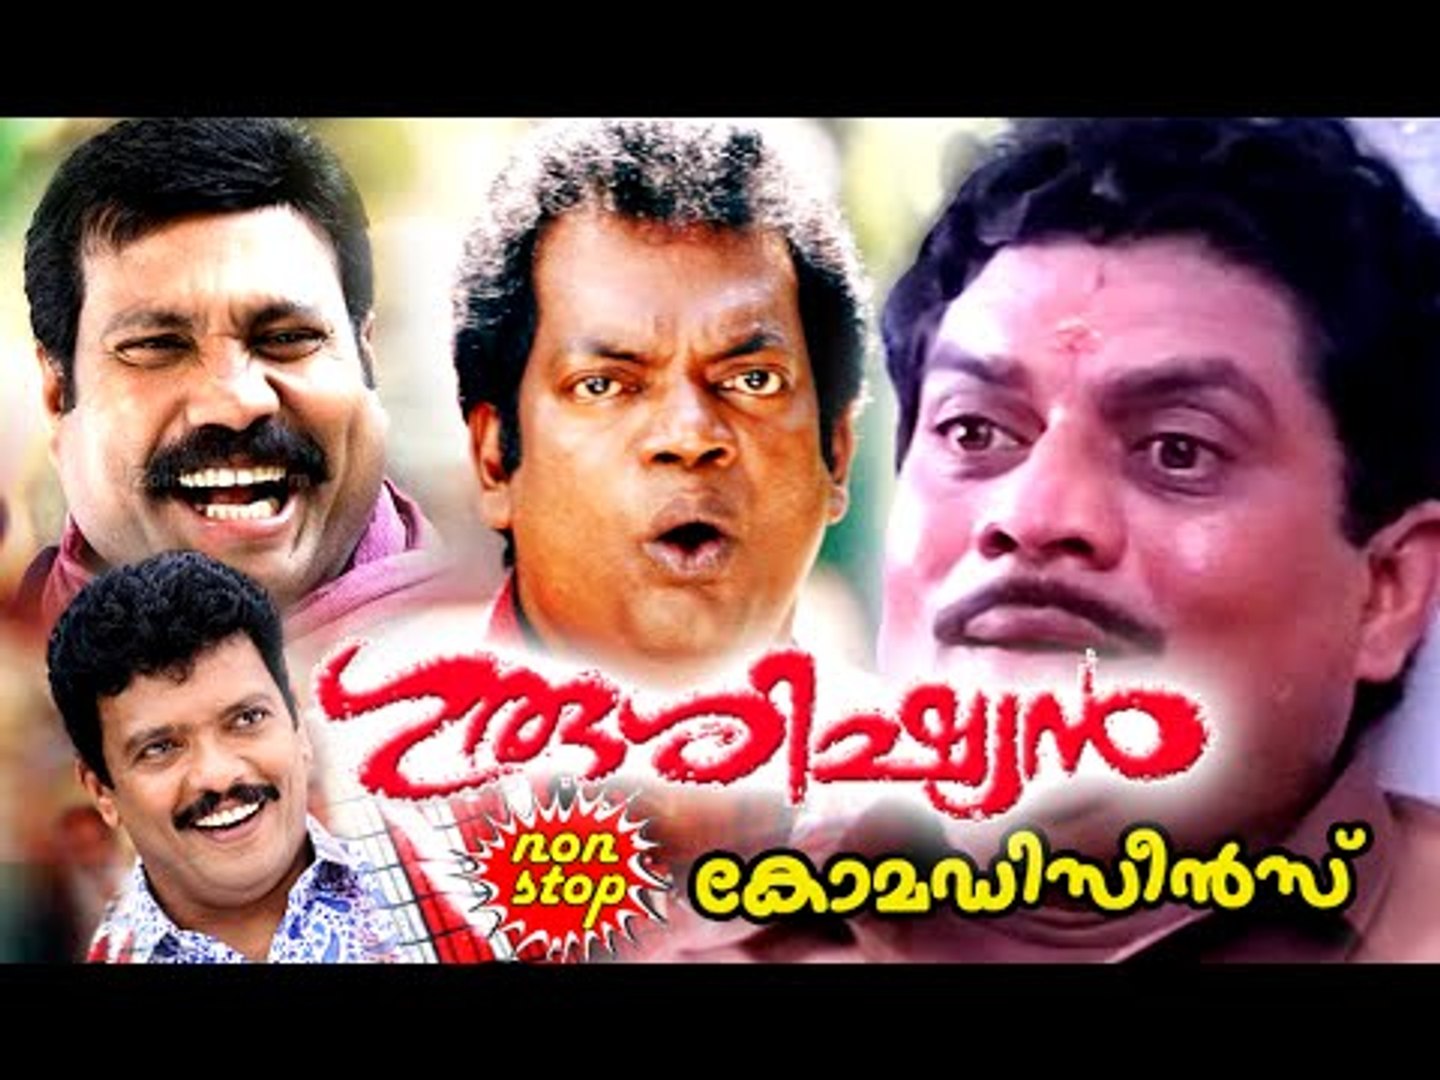 Guru Sishyan Comedy Scenes Non Stop | Malayalam Comedy Movies | Malayalam Comedy Scenes From Movies